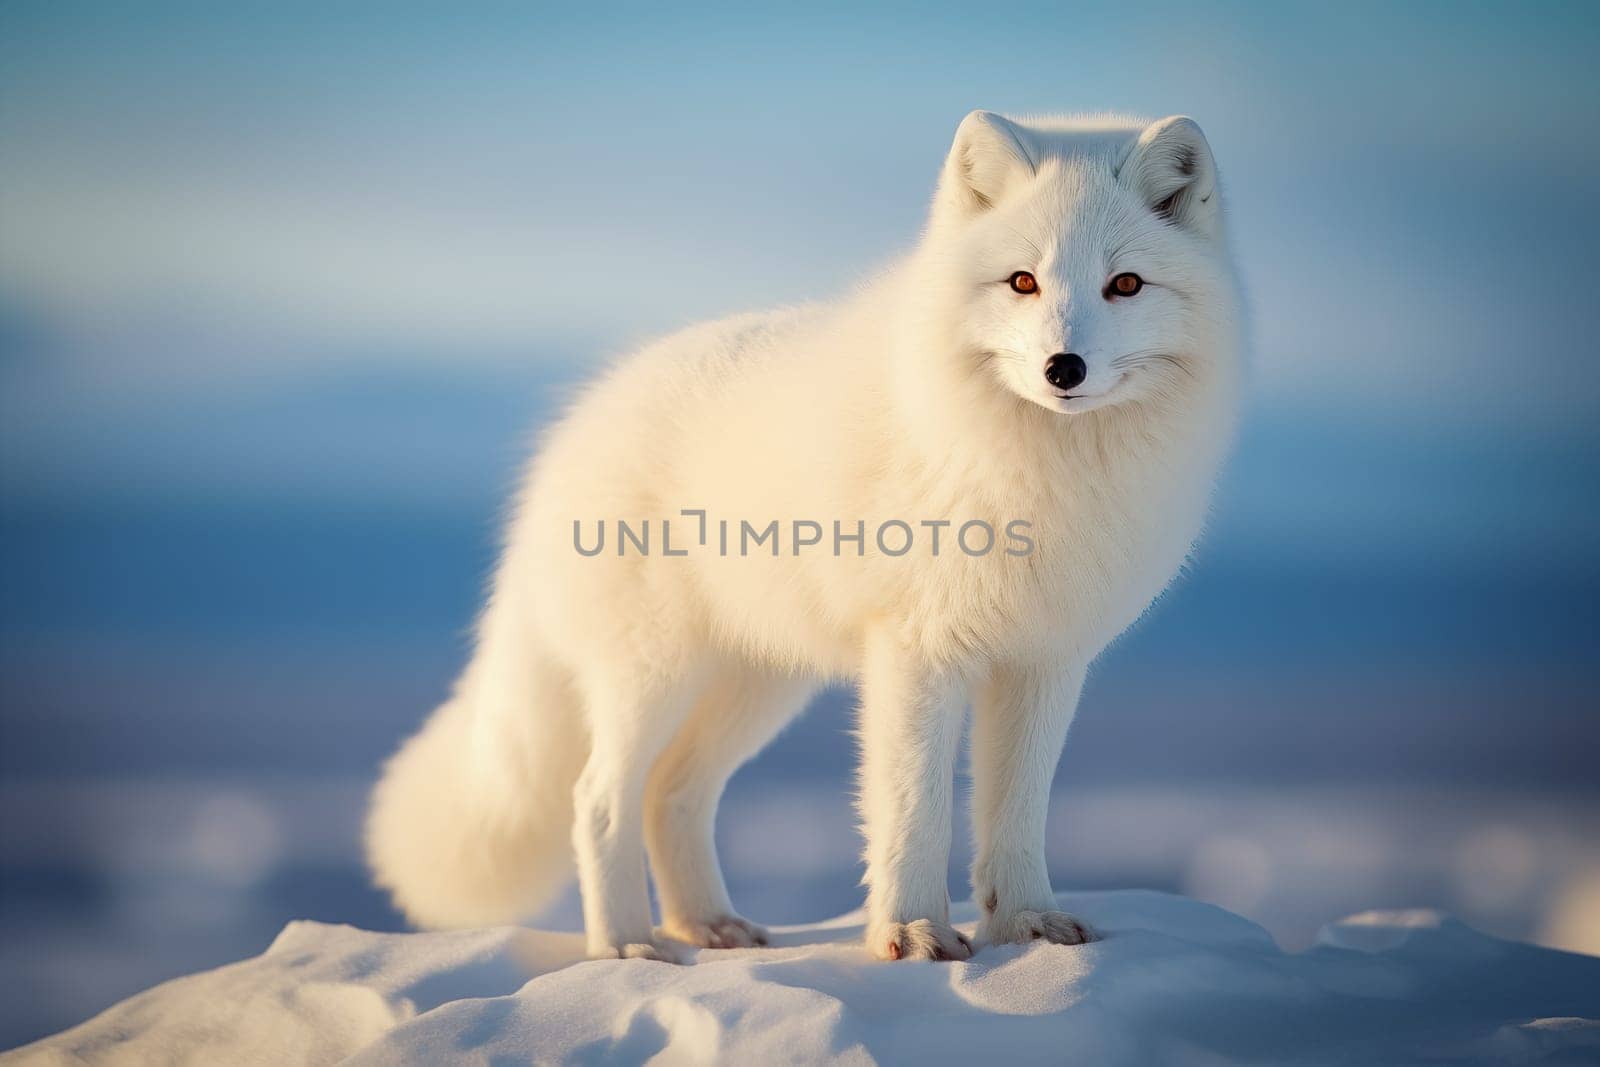 White Arctic Fox in Snowy Landscape by dimol